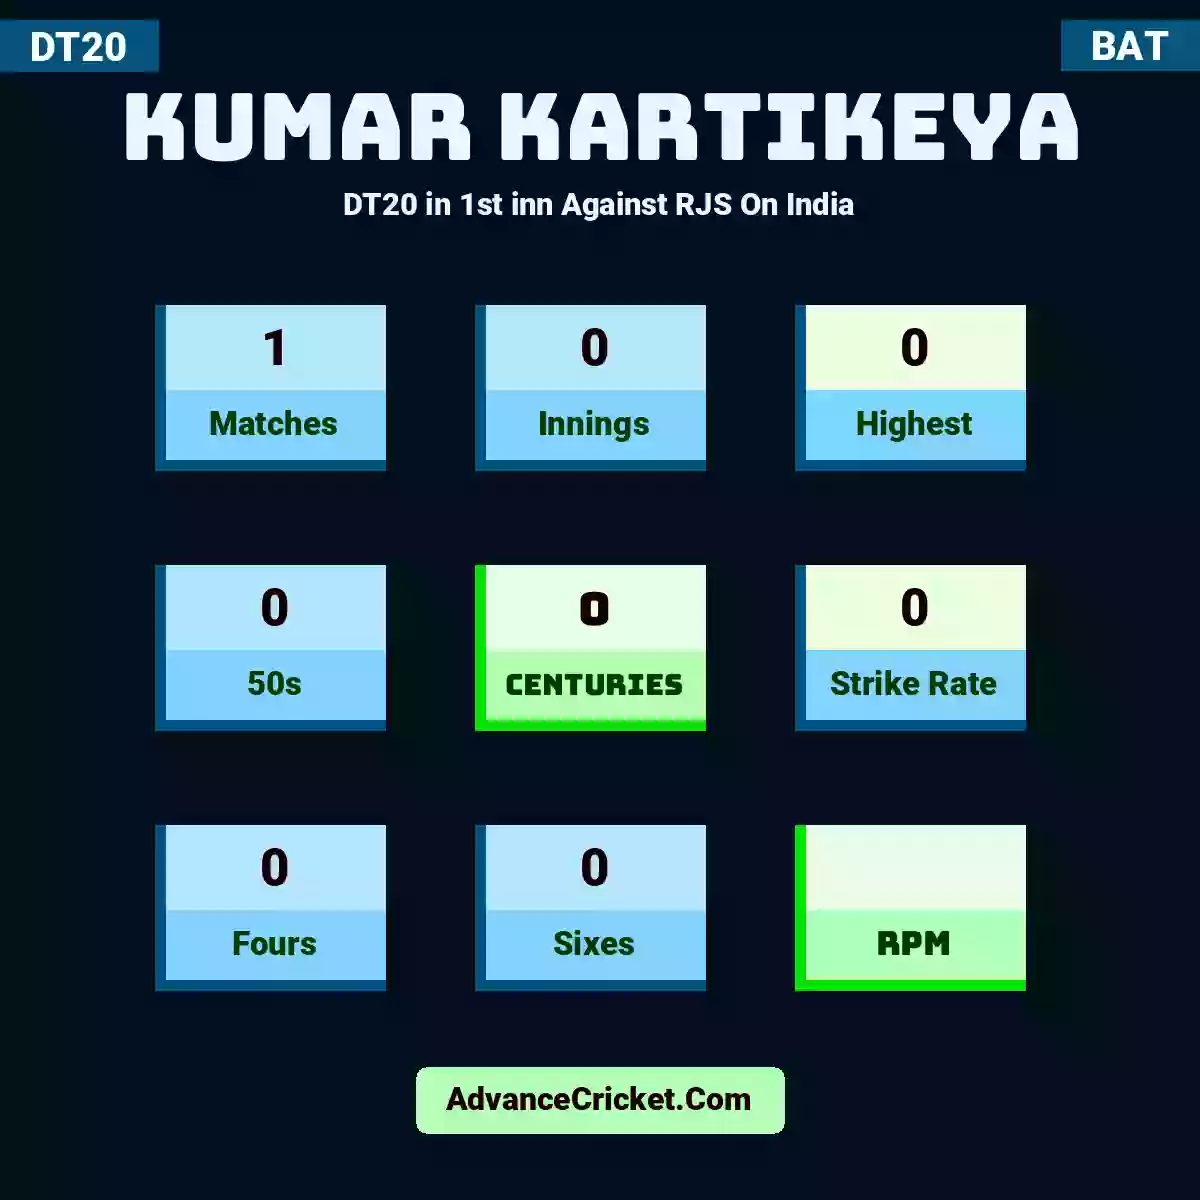 Kumar Kartikeya DT20  in 1st inn Against RJS On India, Kumar Kartikeya played 1 matches, scored 0 runs as highest, 0 half-centuries, and 0 centuries, with a strike rate of 0. K.Kartikeya hit 0 fours and 0 sixes.